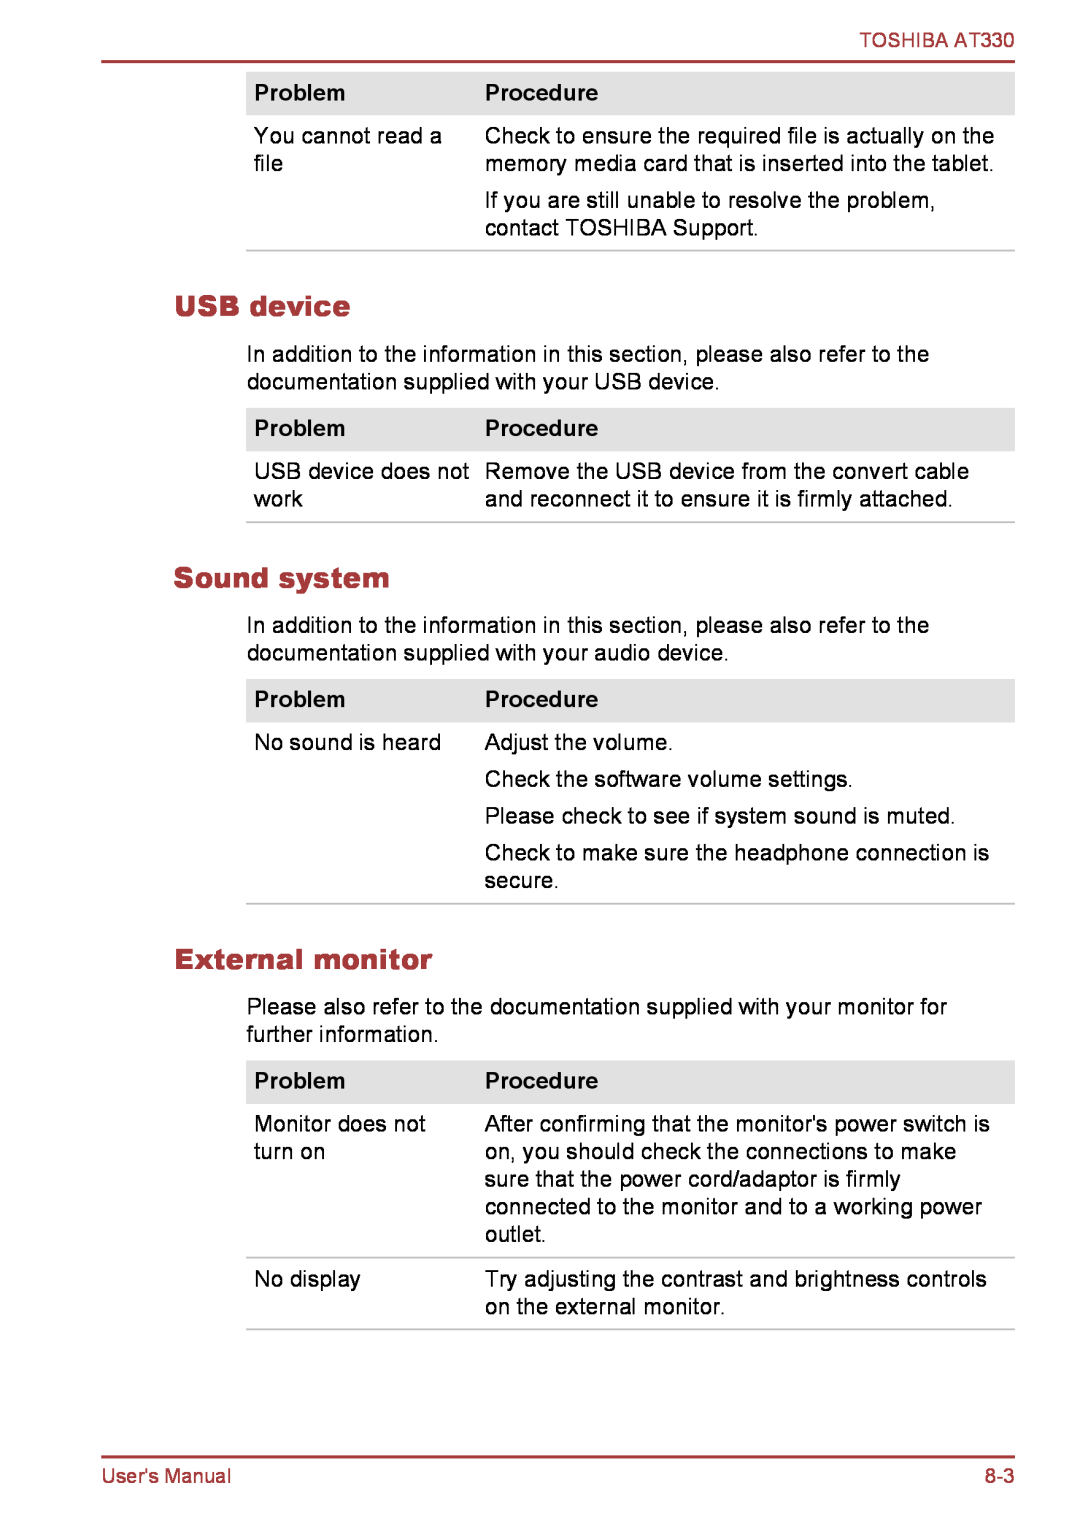 Toshiba at330 user manual USB device, Sound system, External monitor, Problem, Procedure 